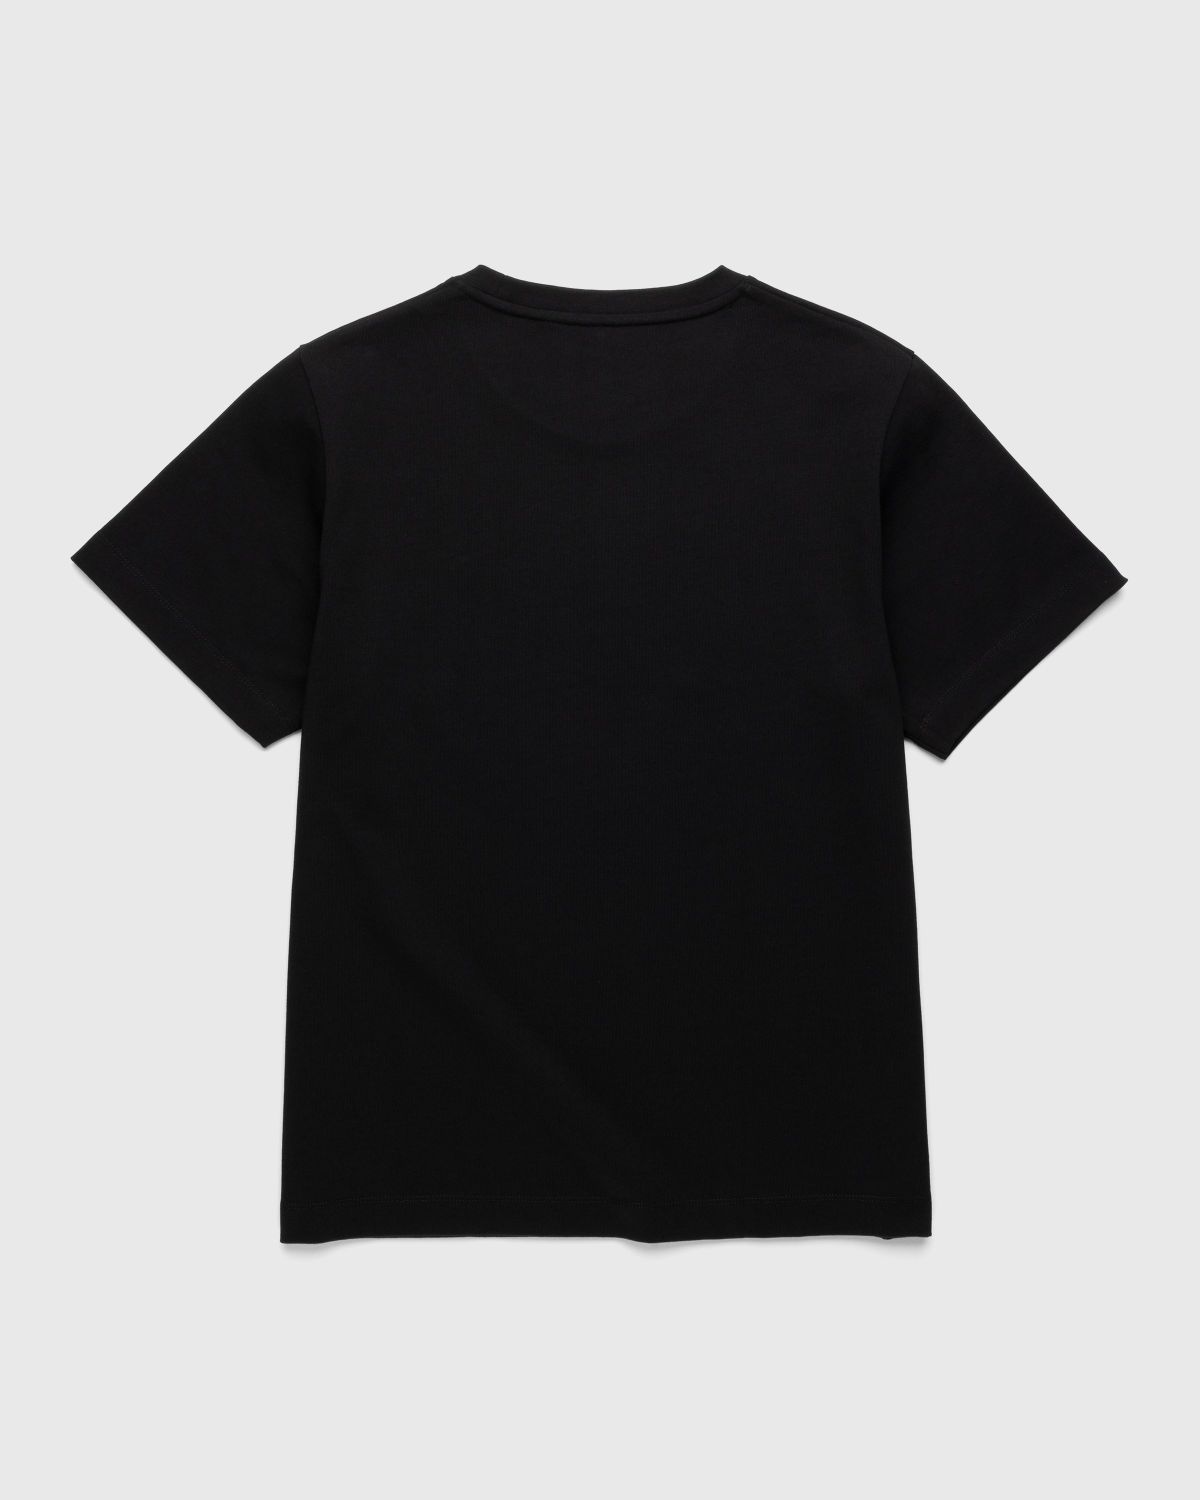 Marine Serre – Organic Cotton T-Shirt Black - T-shirts - Black - Image 3